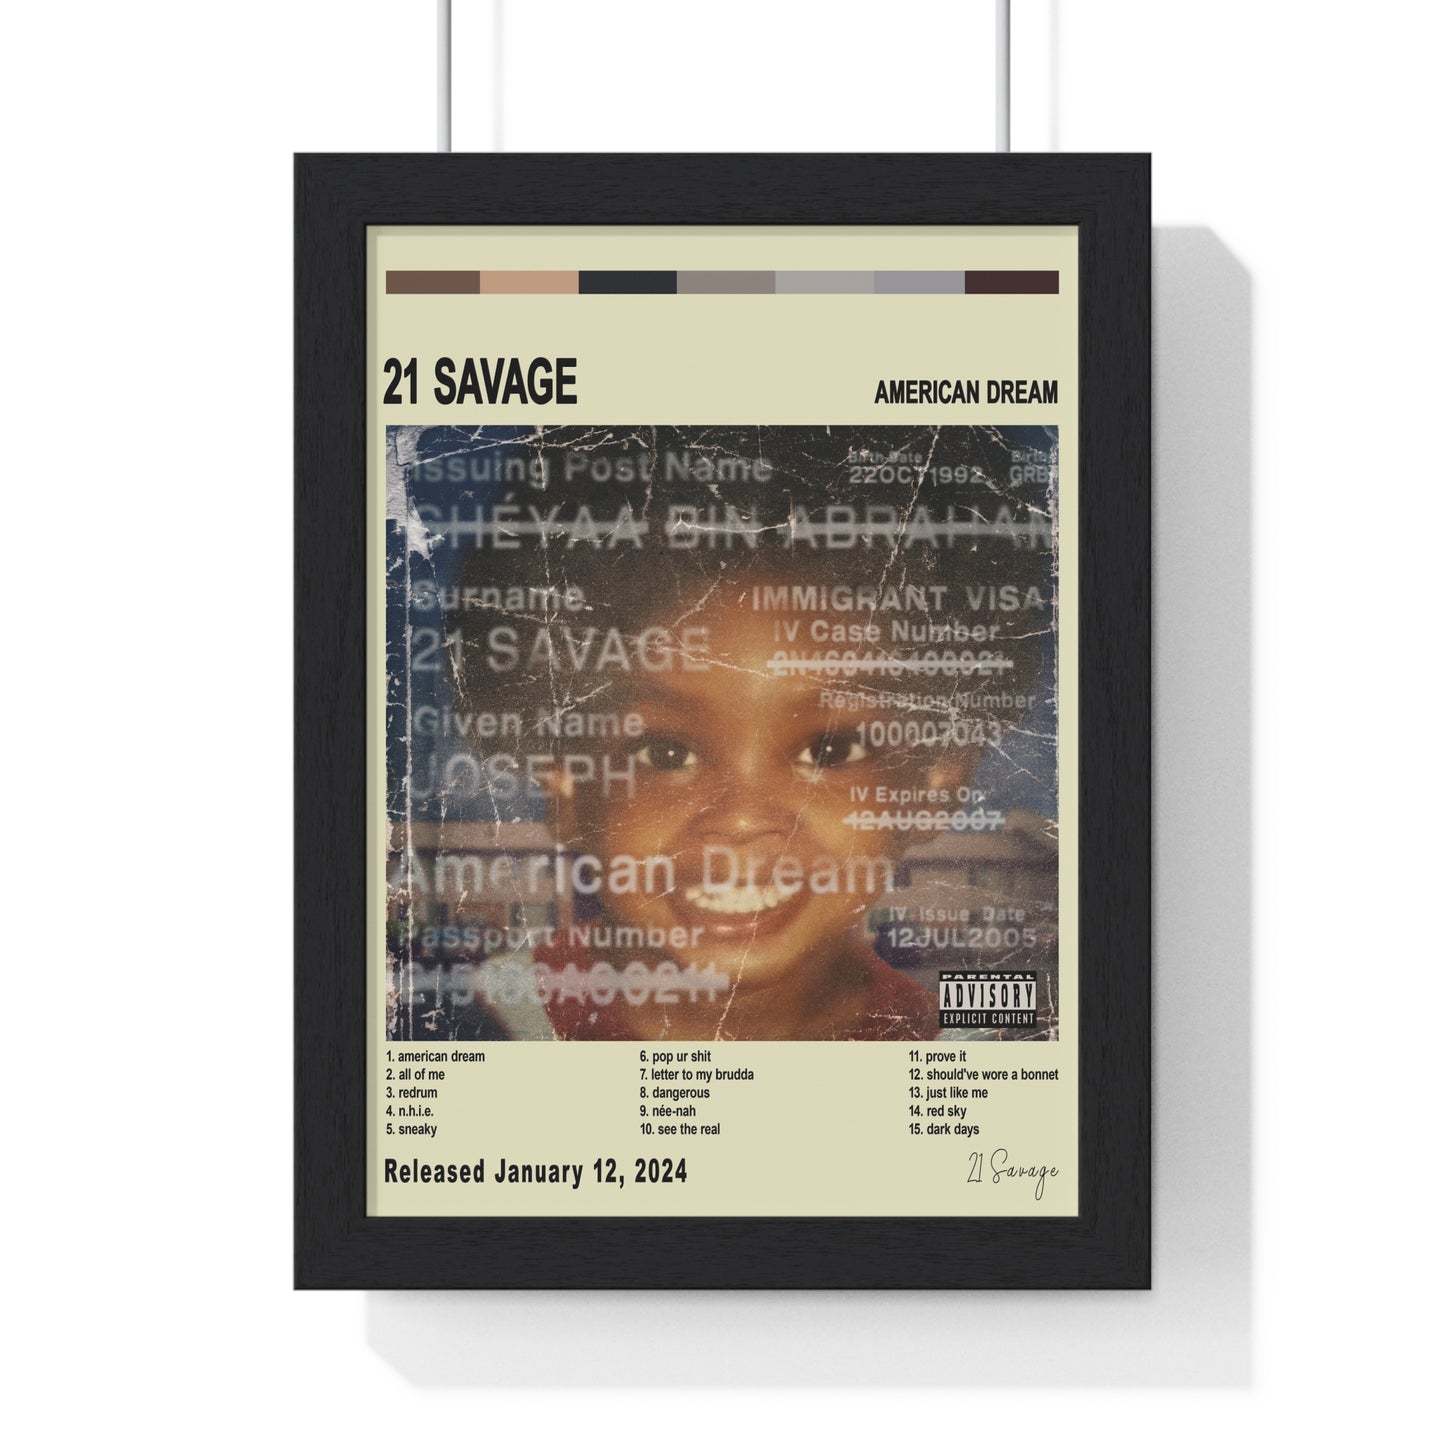 21 savage - Album Cover Poster